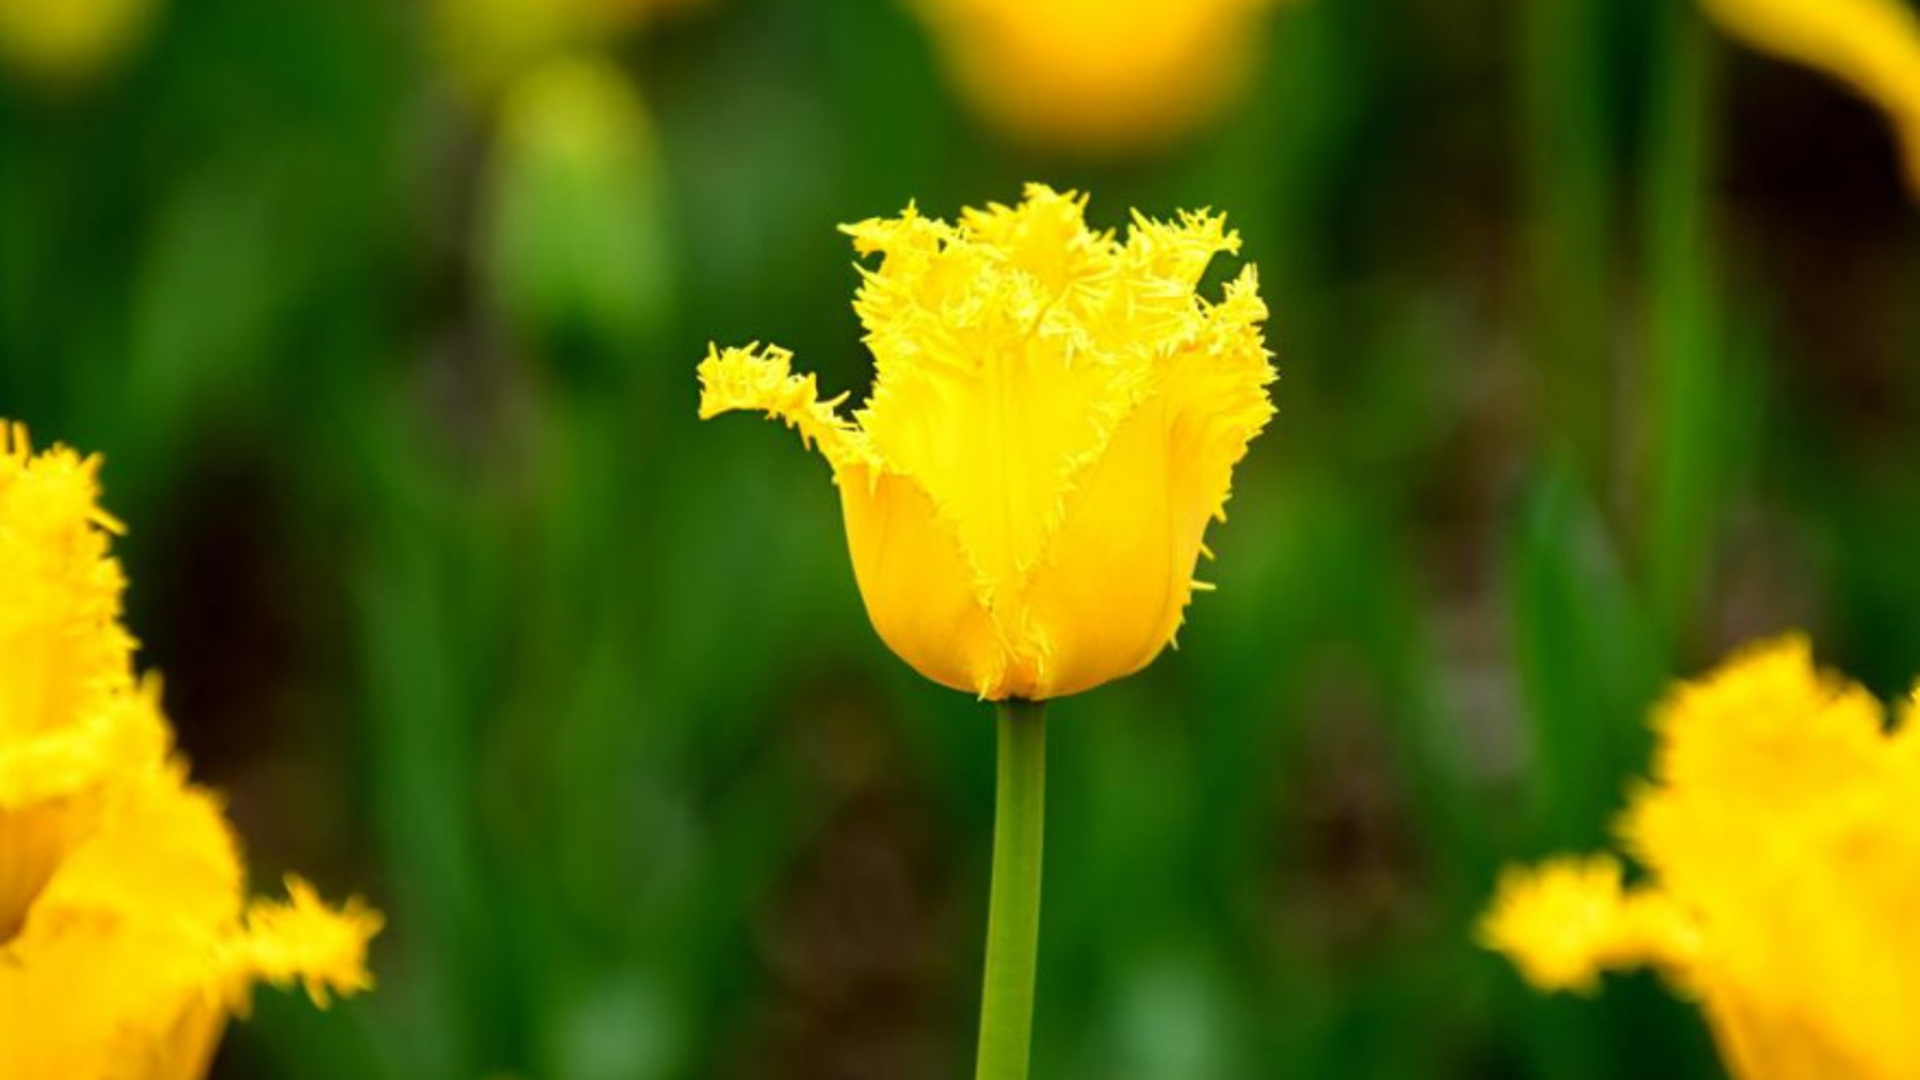 Тюльпан Valery Gergiev Yellow